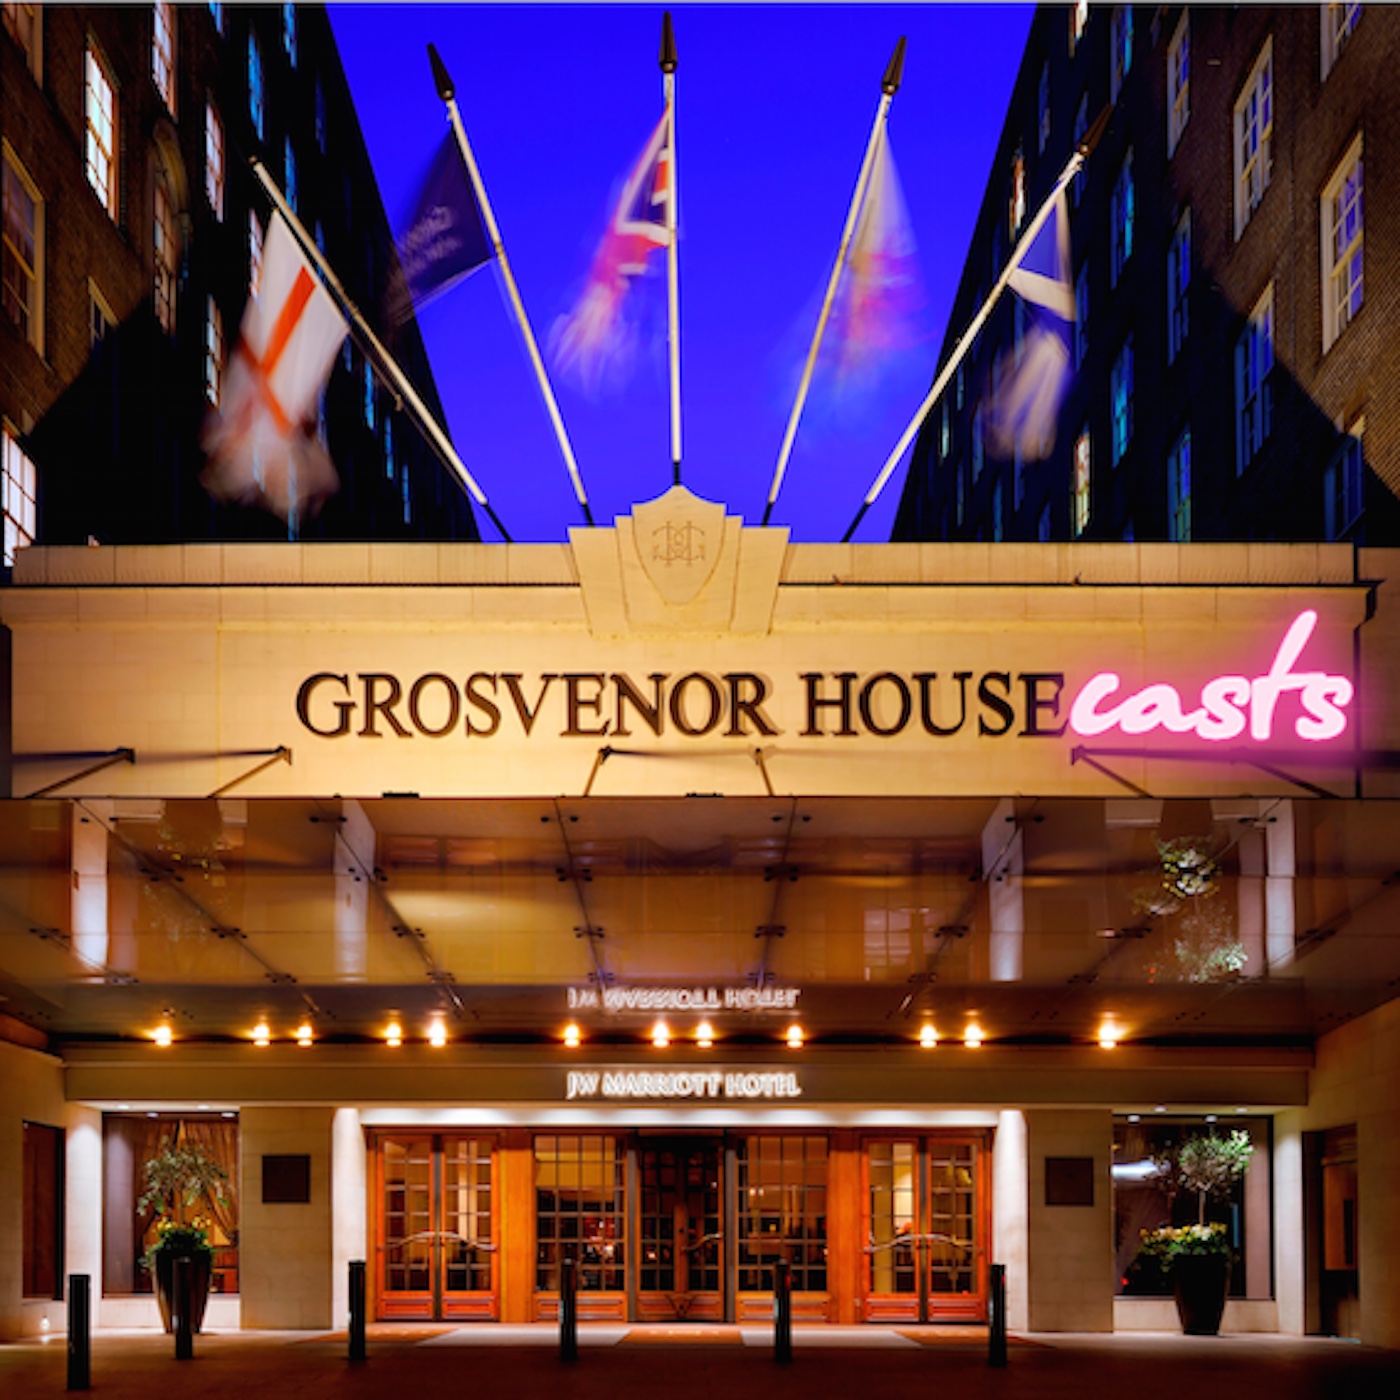 Grosvenor Housecasts